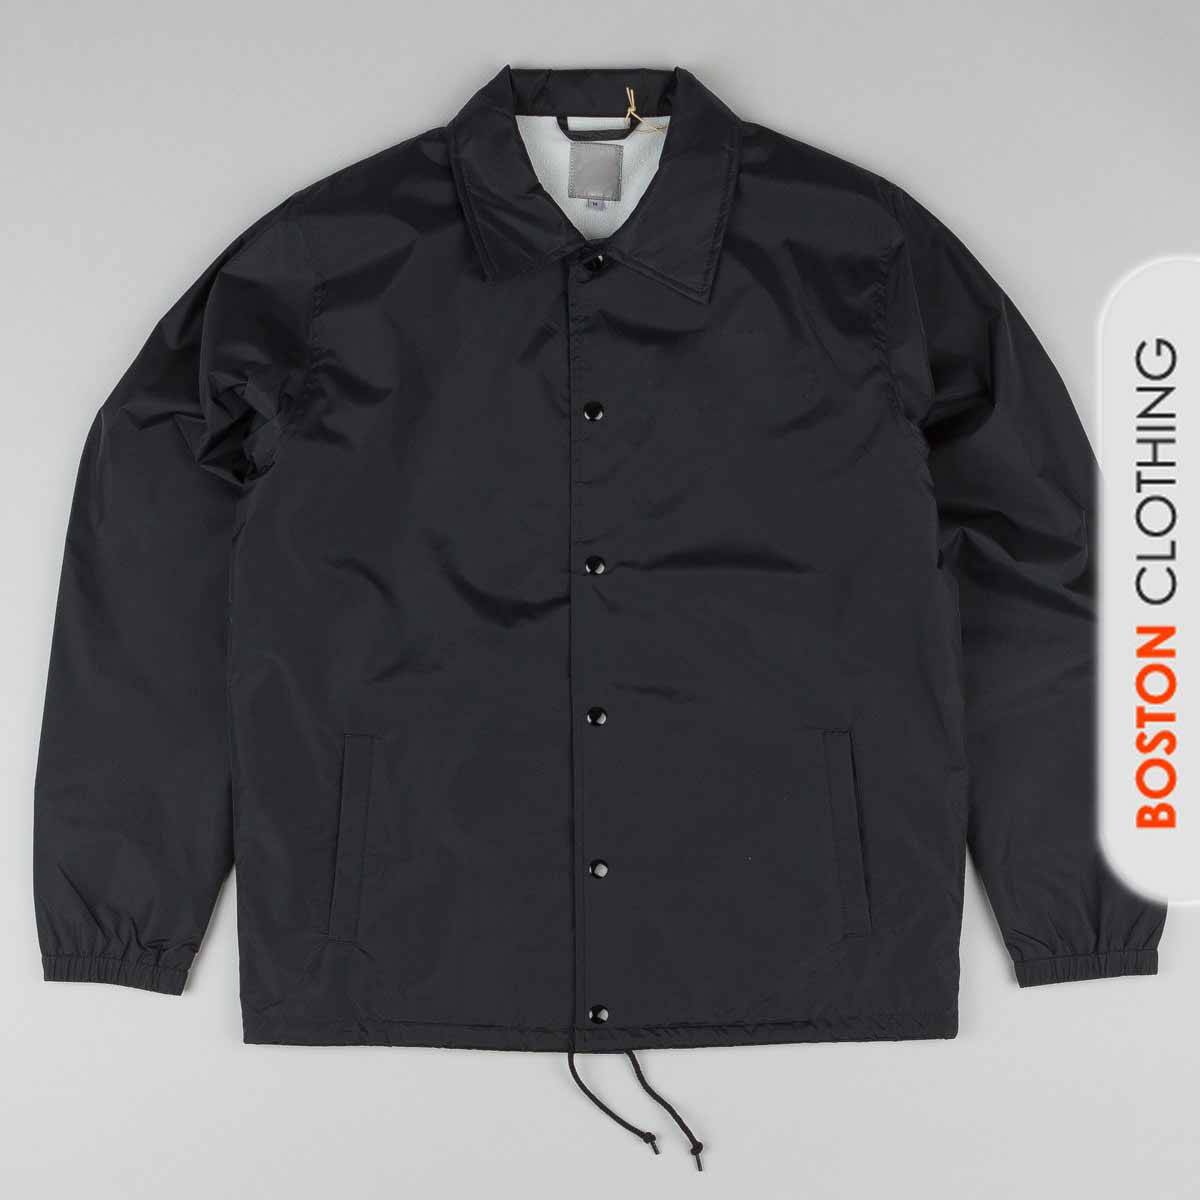 Custom Coach Jacket on Sale, 55% OFF | www.ingeniovirtual.com